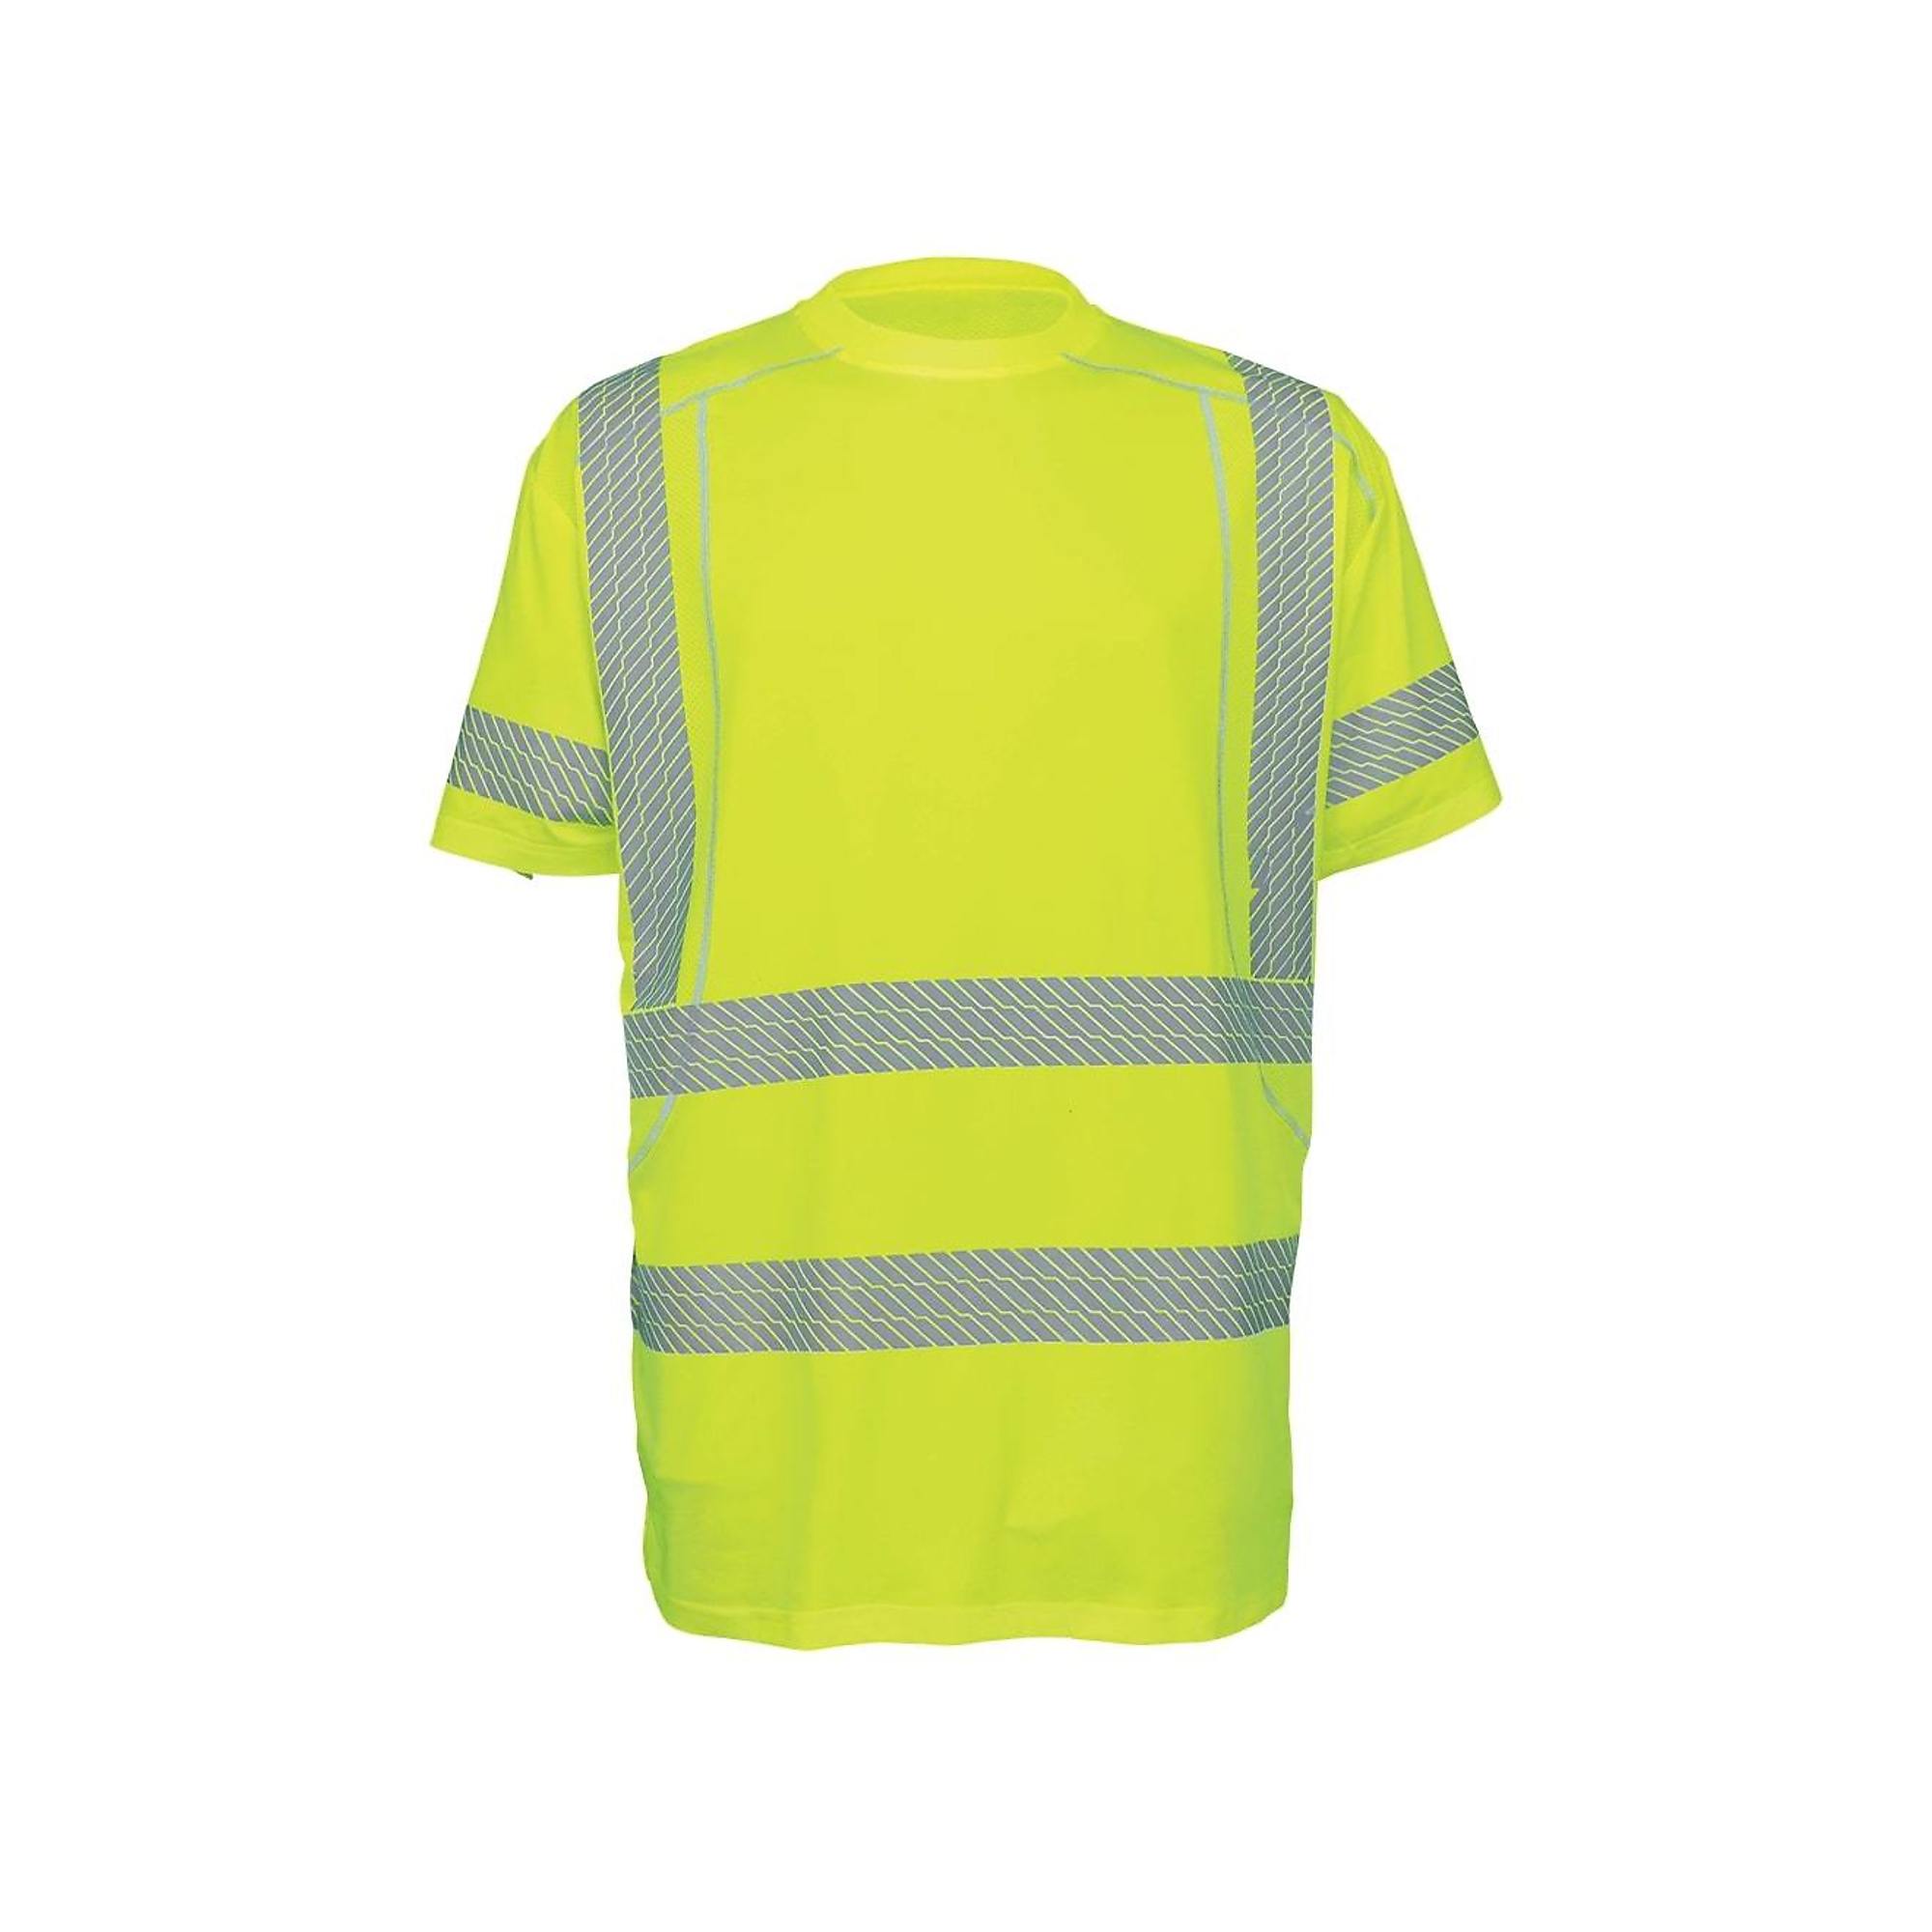 FrogWear, HV Yellow/Green, Class 3 Self-Wicking, Athletic Shirt, Size 6XL, Model GLO-205-6XL